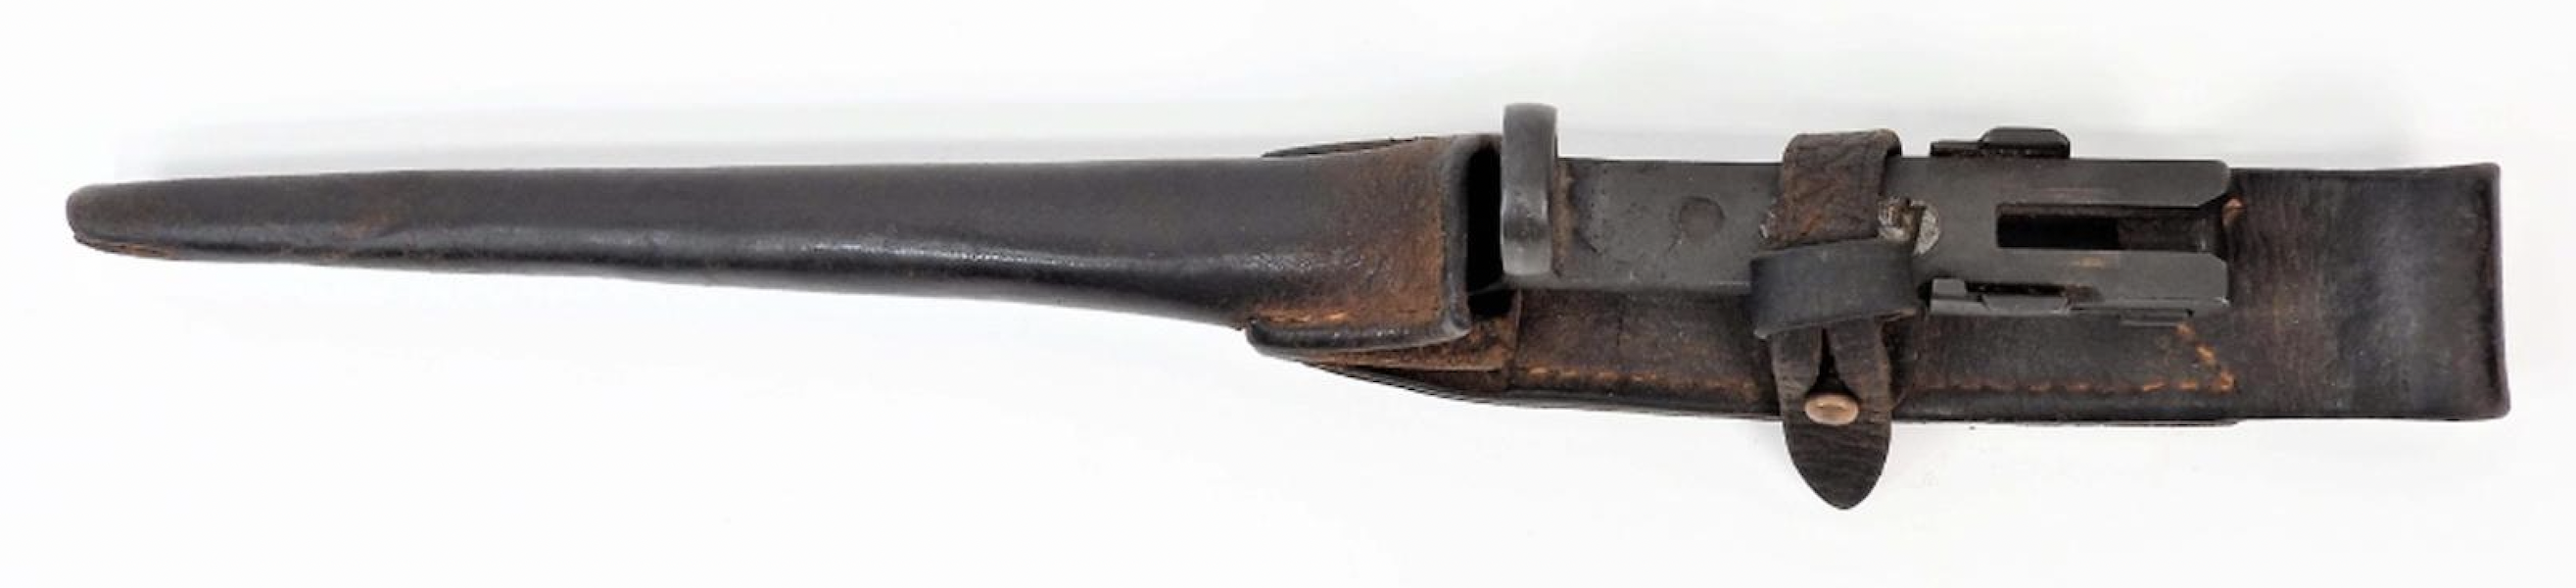 U.S. Johnson model 1941 bayonet and scabbard, estimated at $200-$400